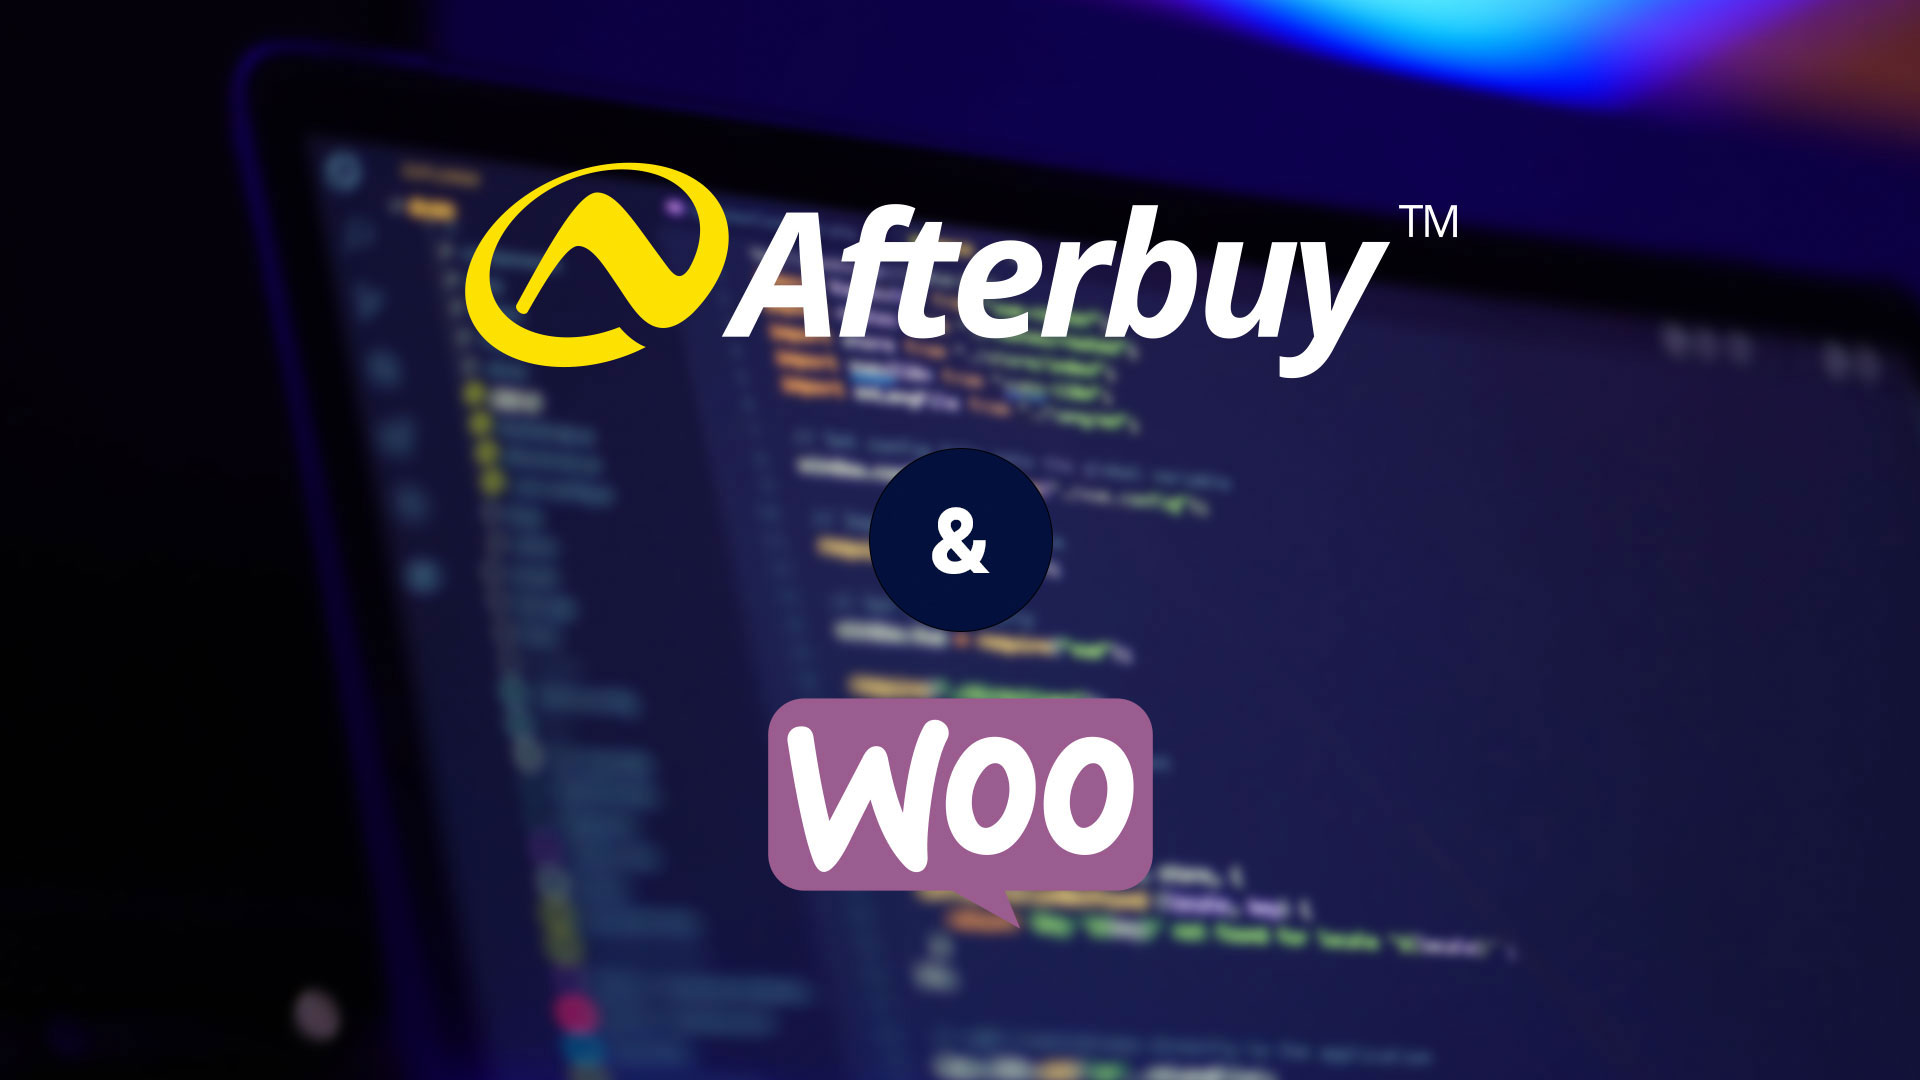 Afterbuy & WooCommerce – was geht da?